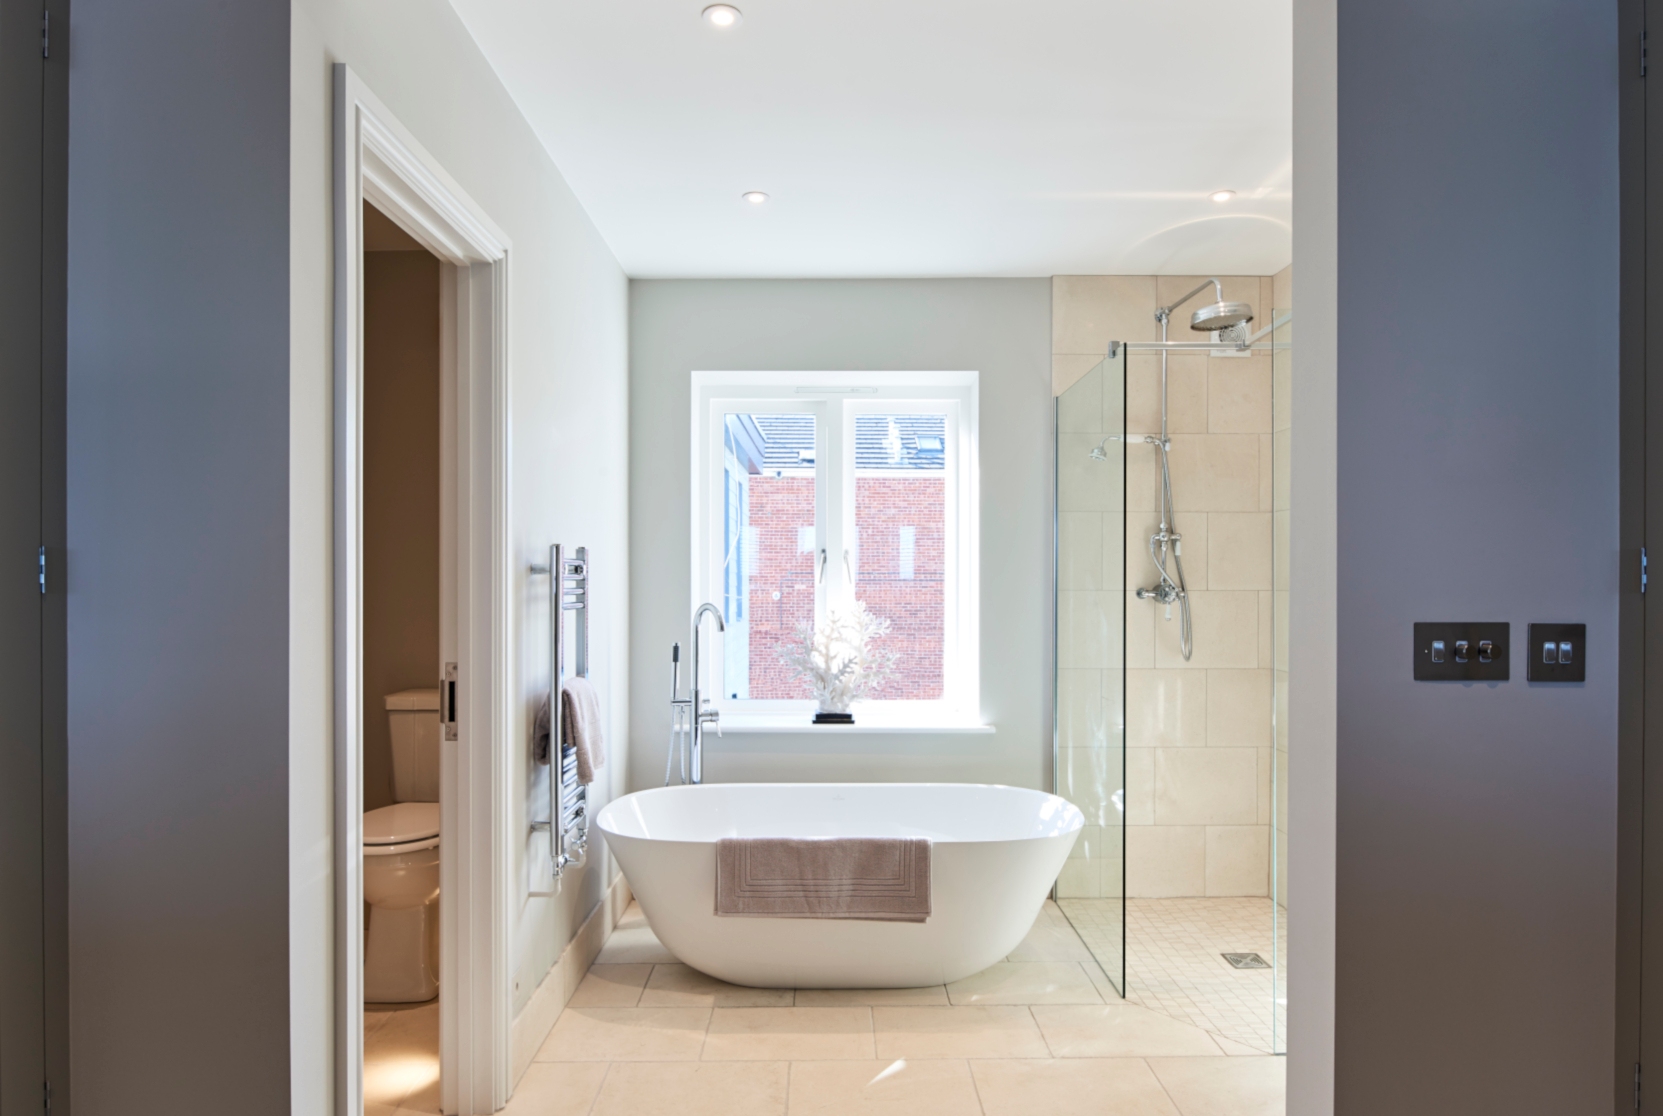 Freestanding bath in grey bathroom - Interior design - Claire Garner ...